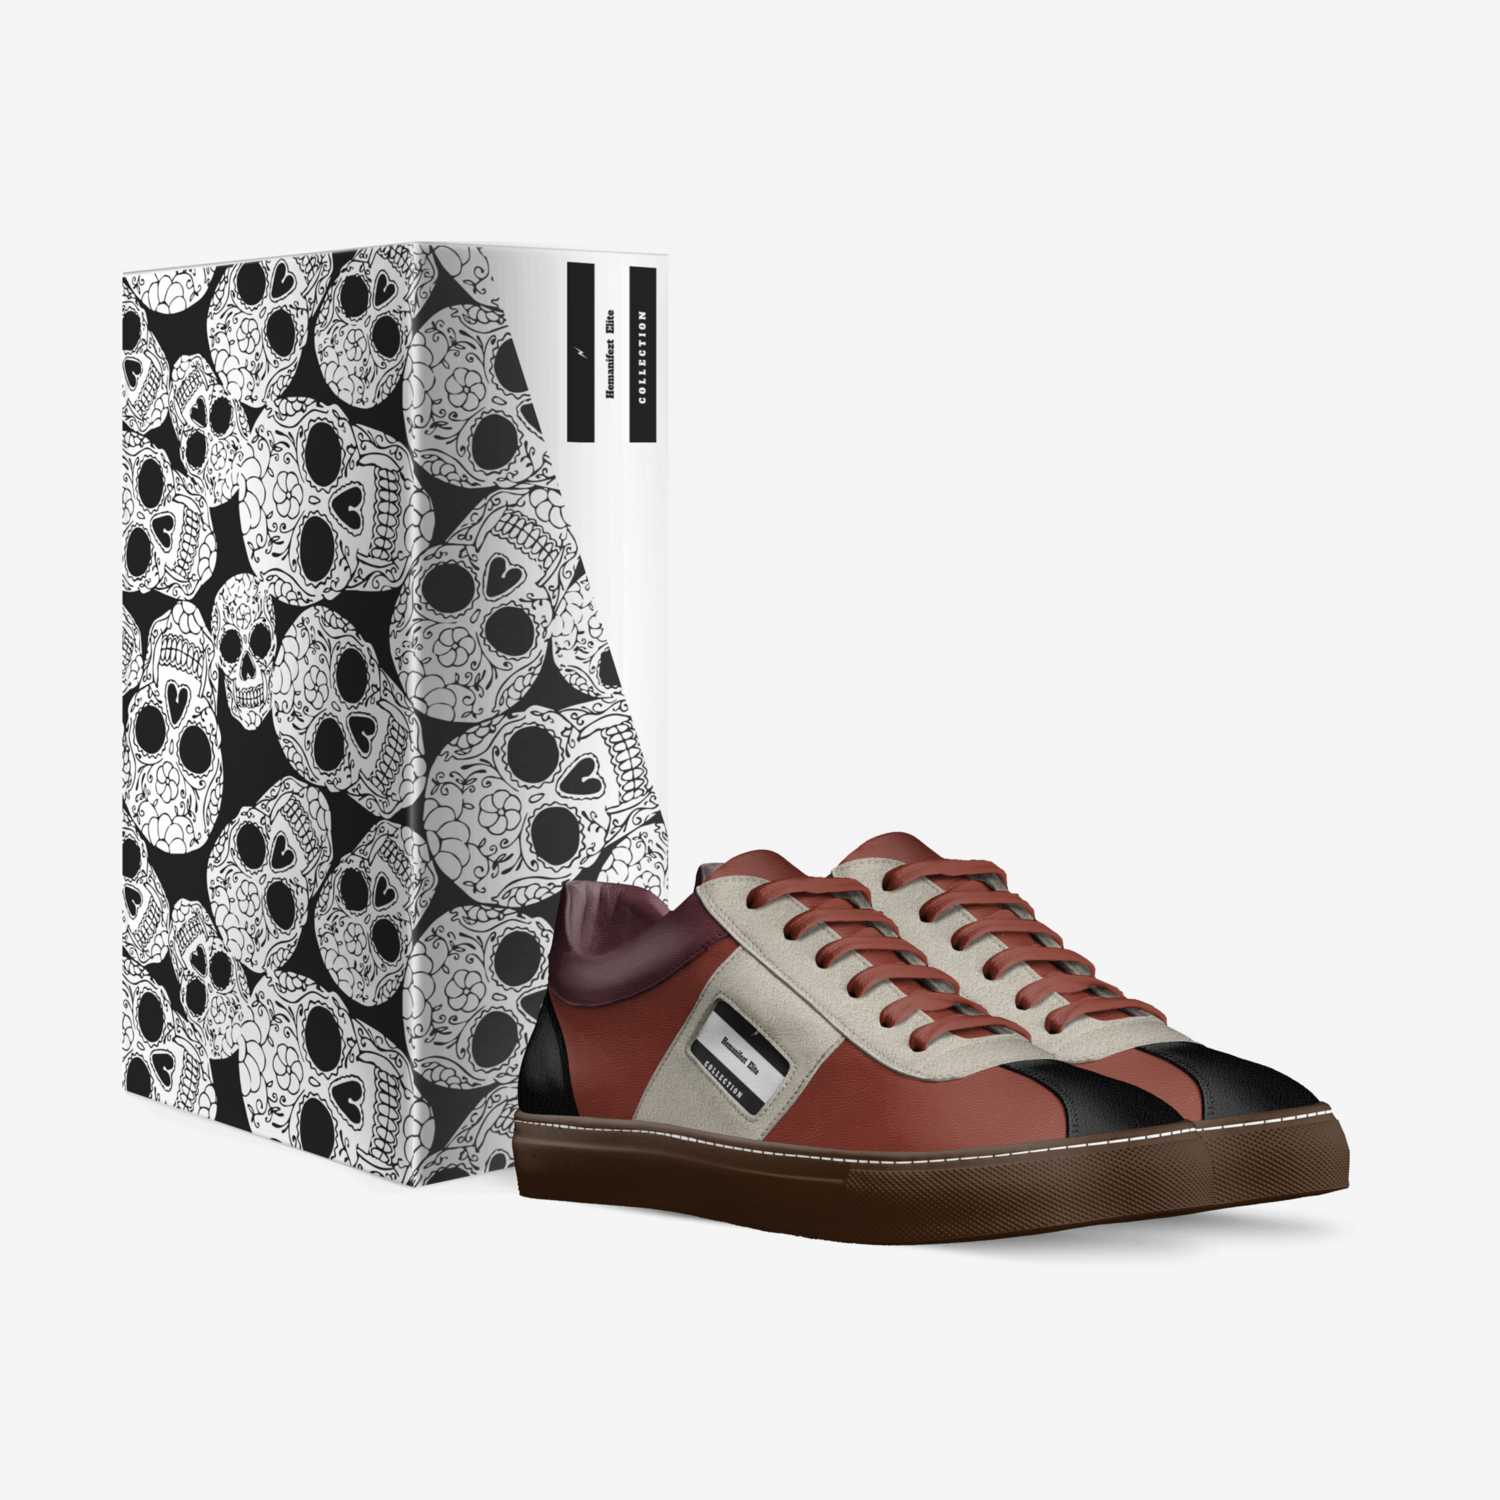 Hemanifezt  Elite custom made in Italy shoes by Sean Hemanifezt Cothrine | Box view